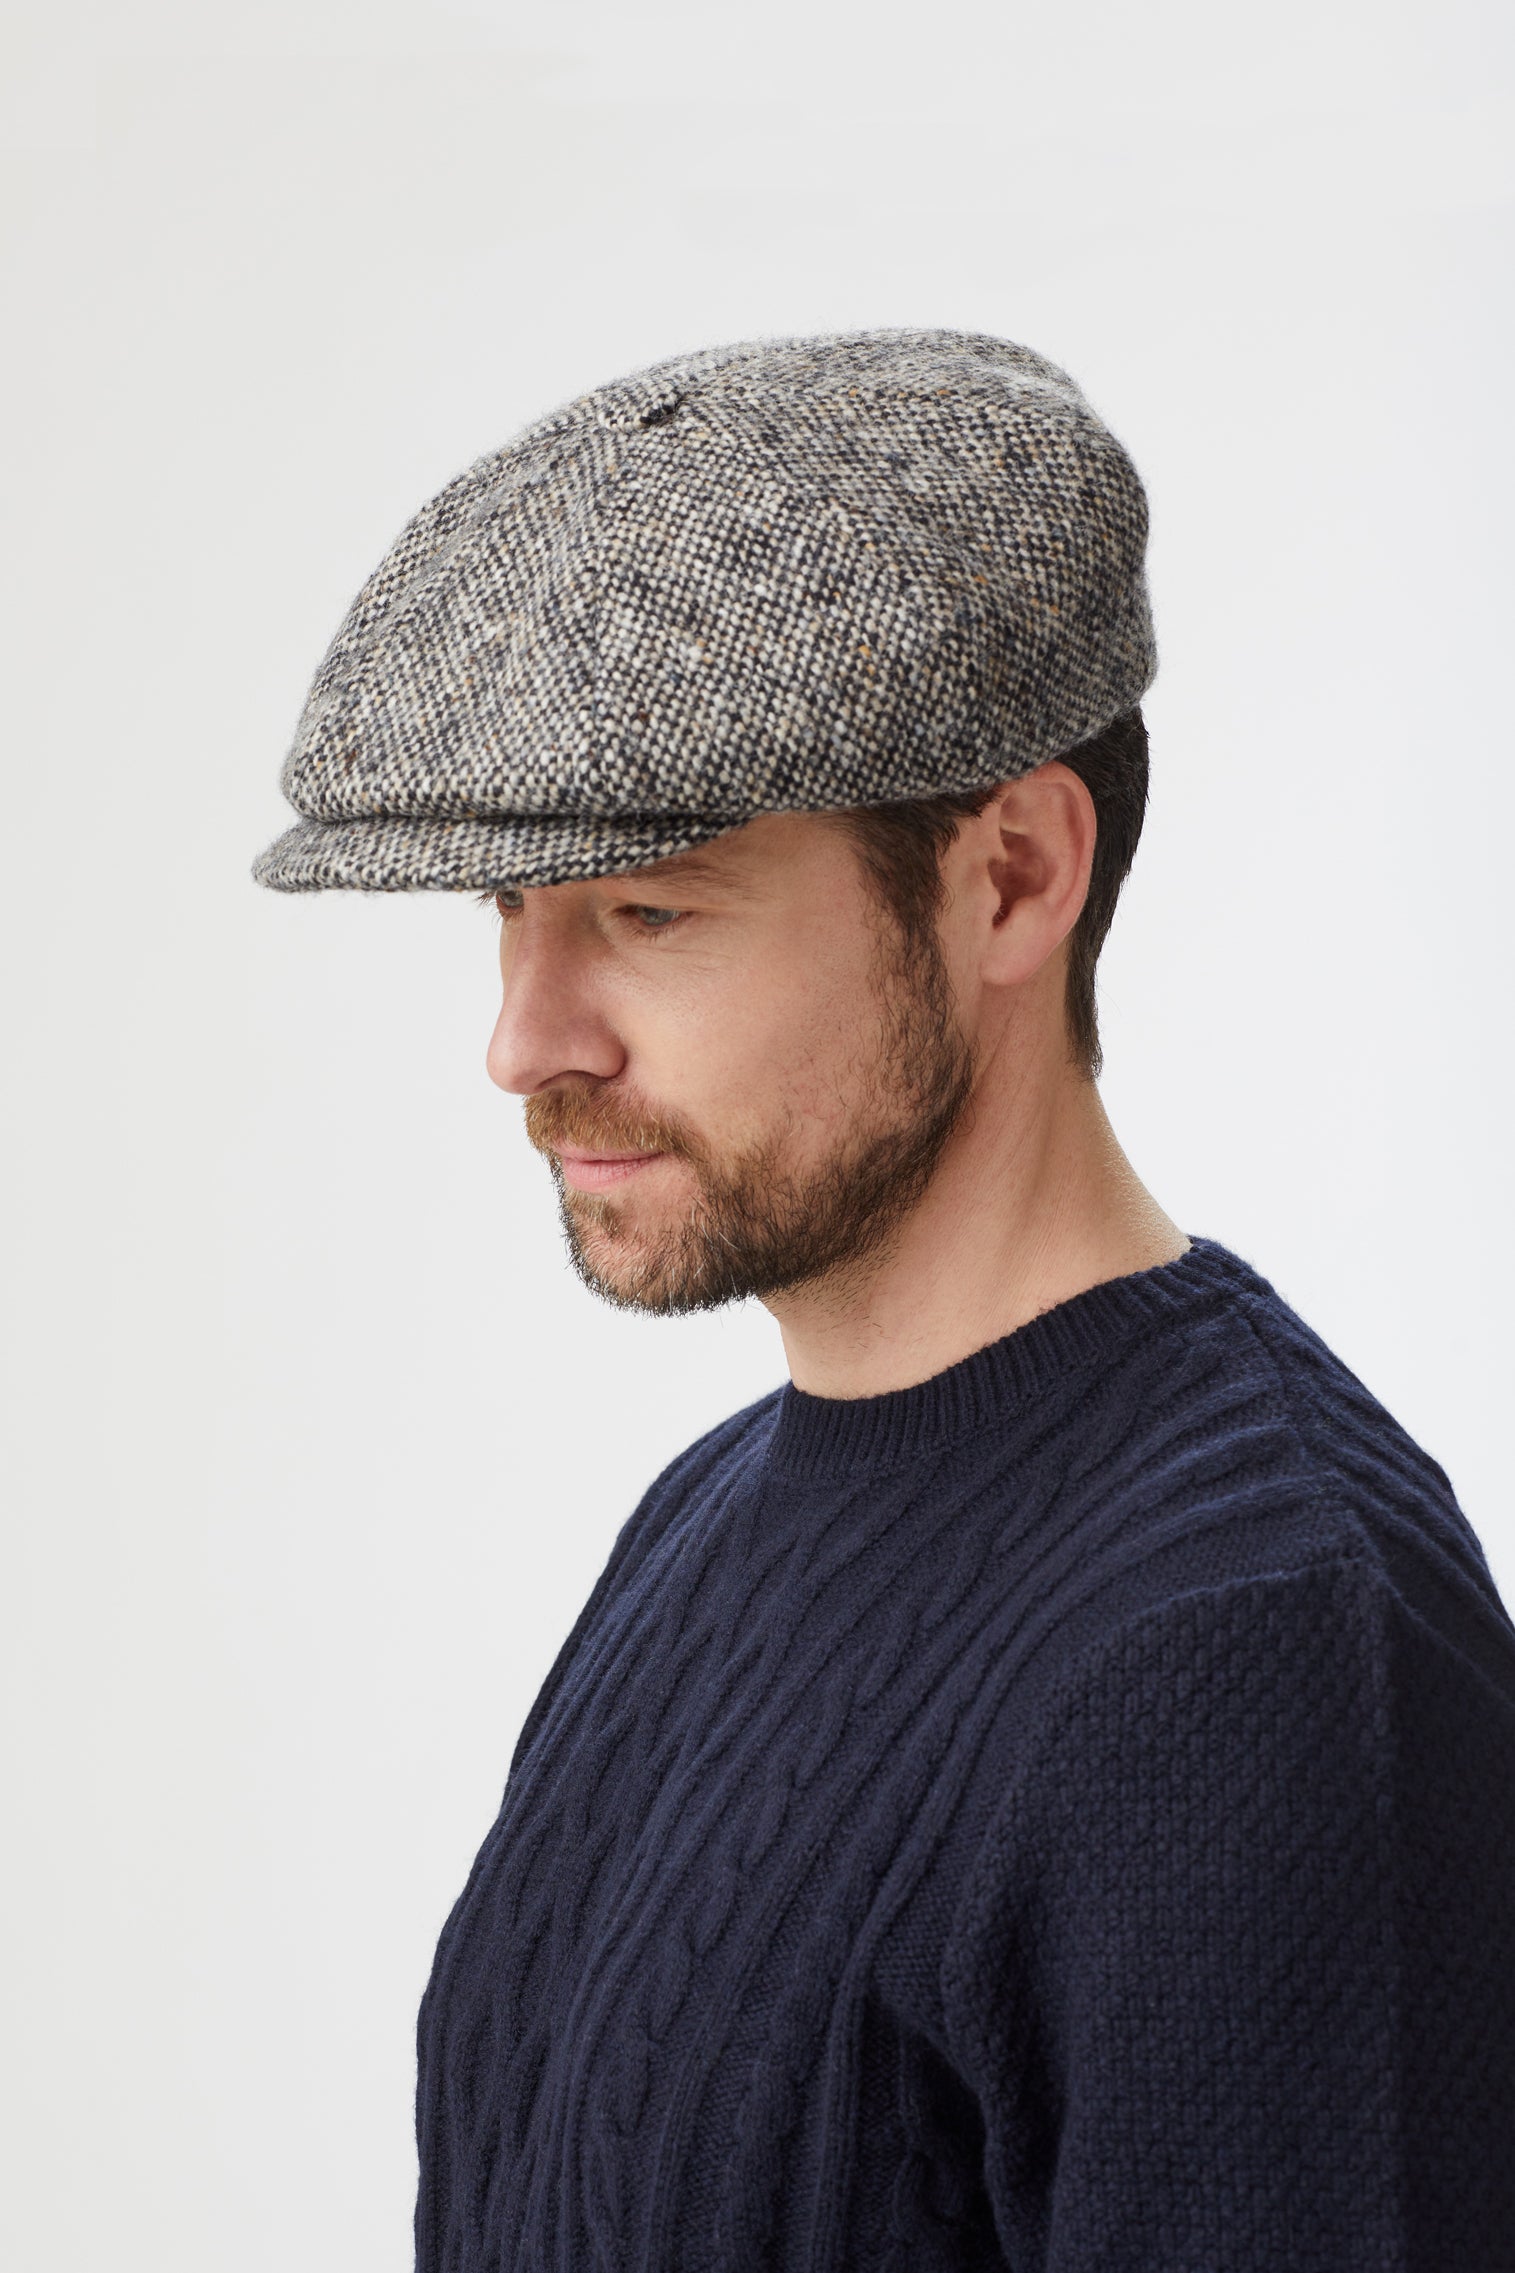 Muirfield Tweed Bakerboy Cap - Men's Hats - Lock & Co. Hatters London UK